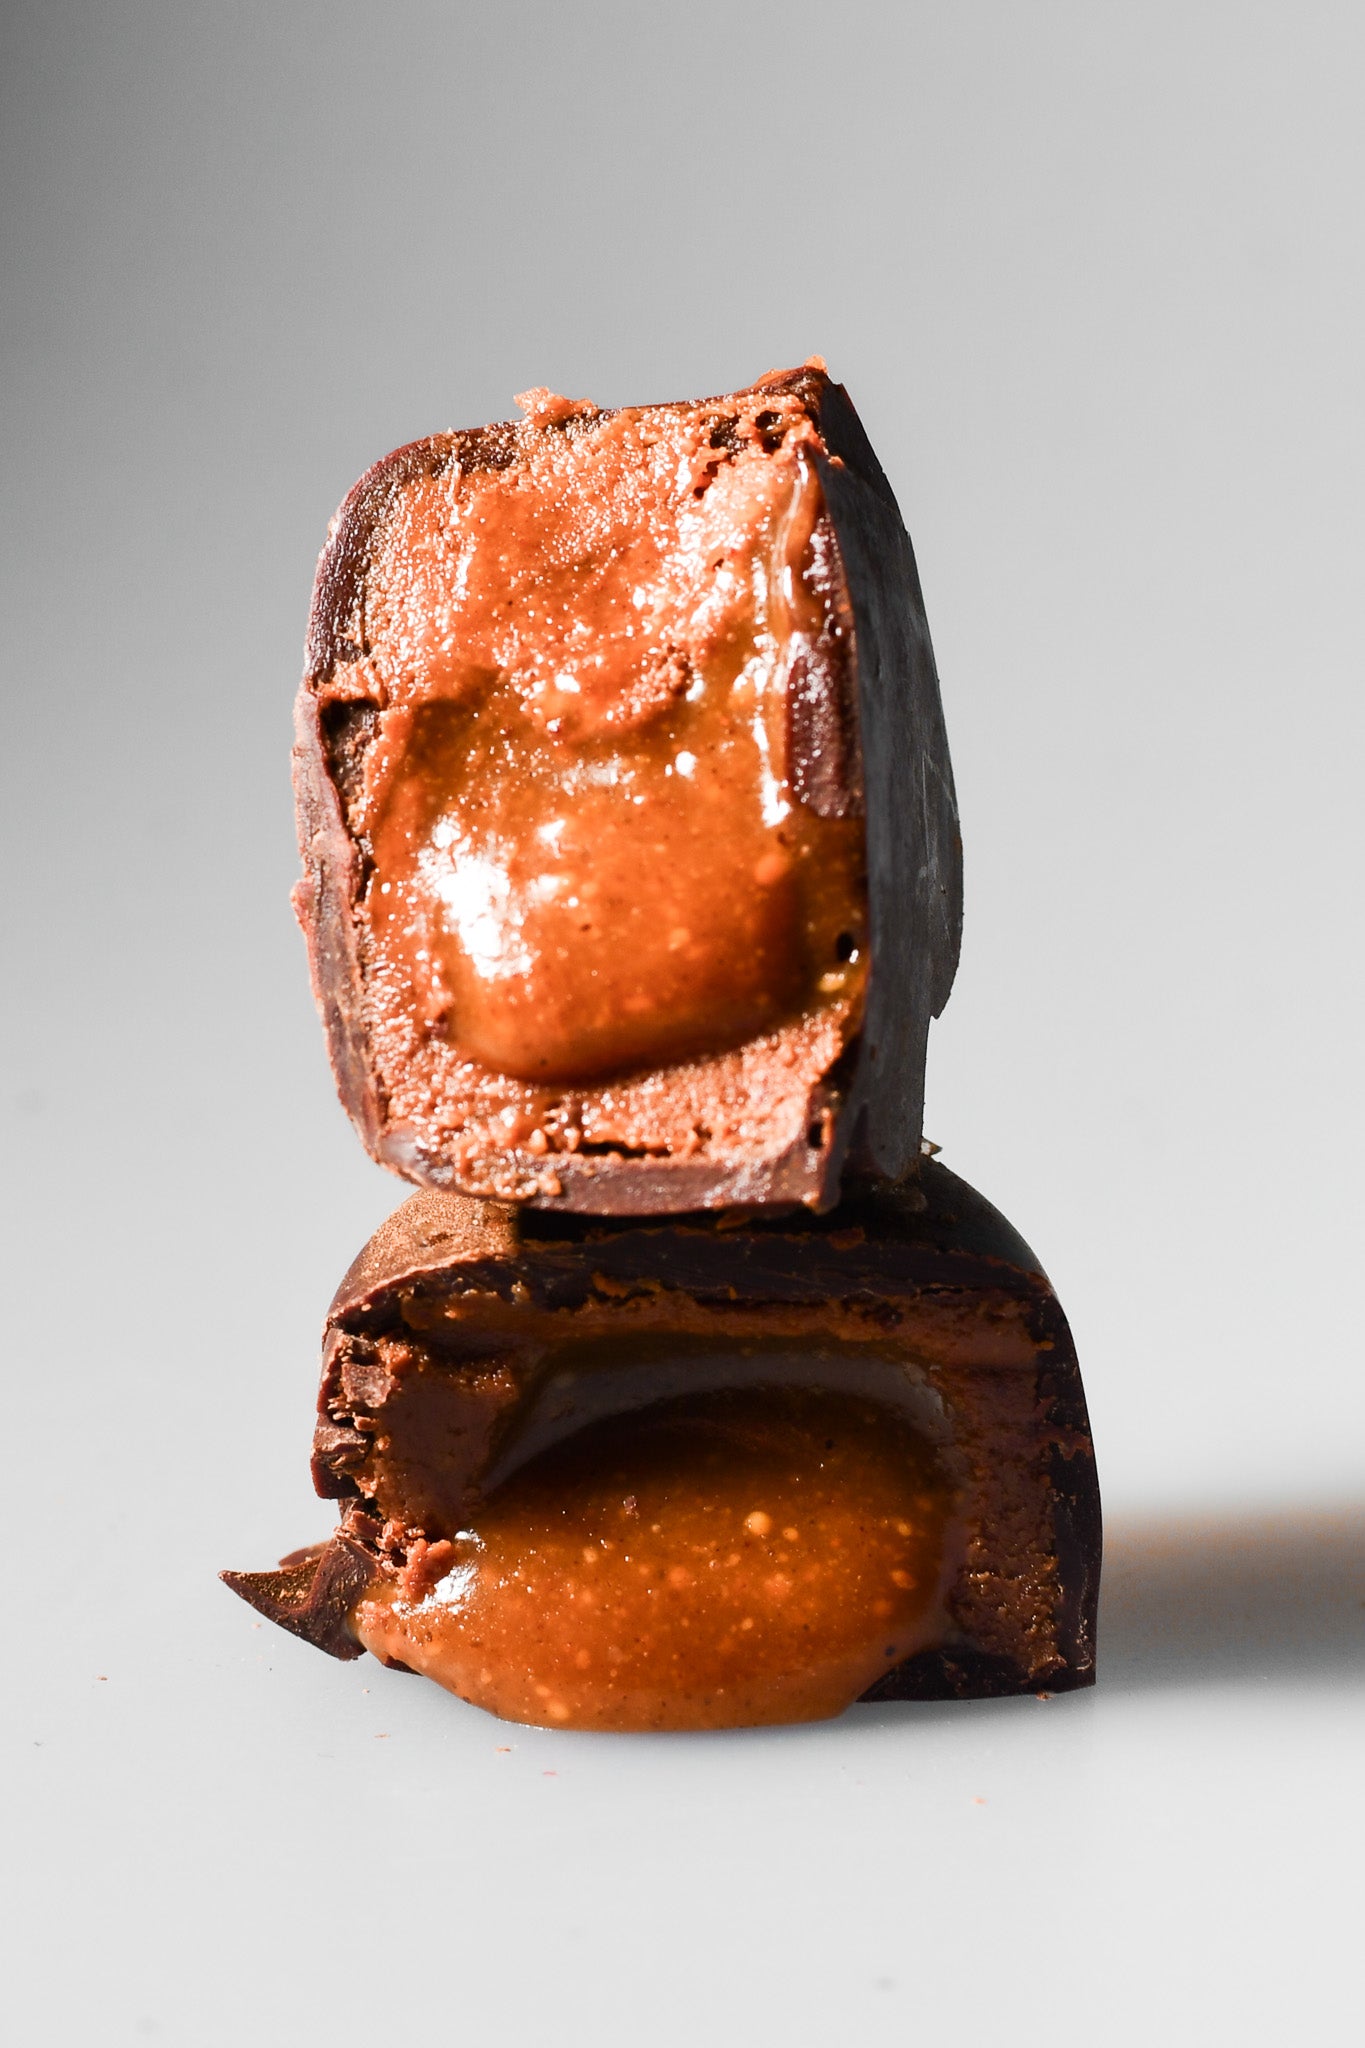 N°2 Peanut Ganache + Salted Cinnamon Caramel